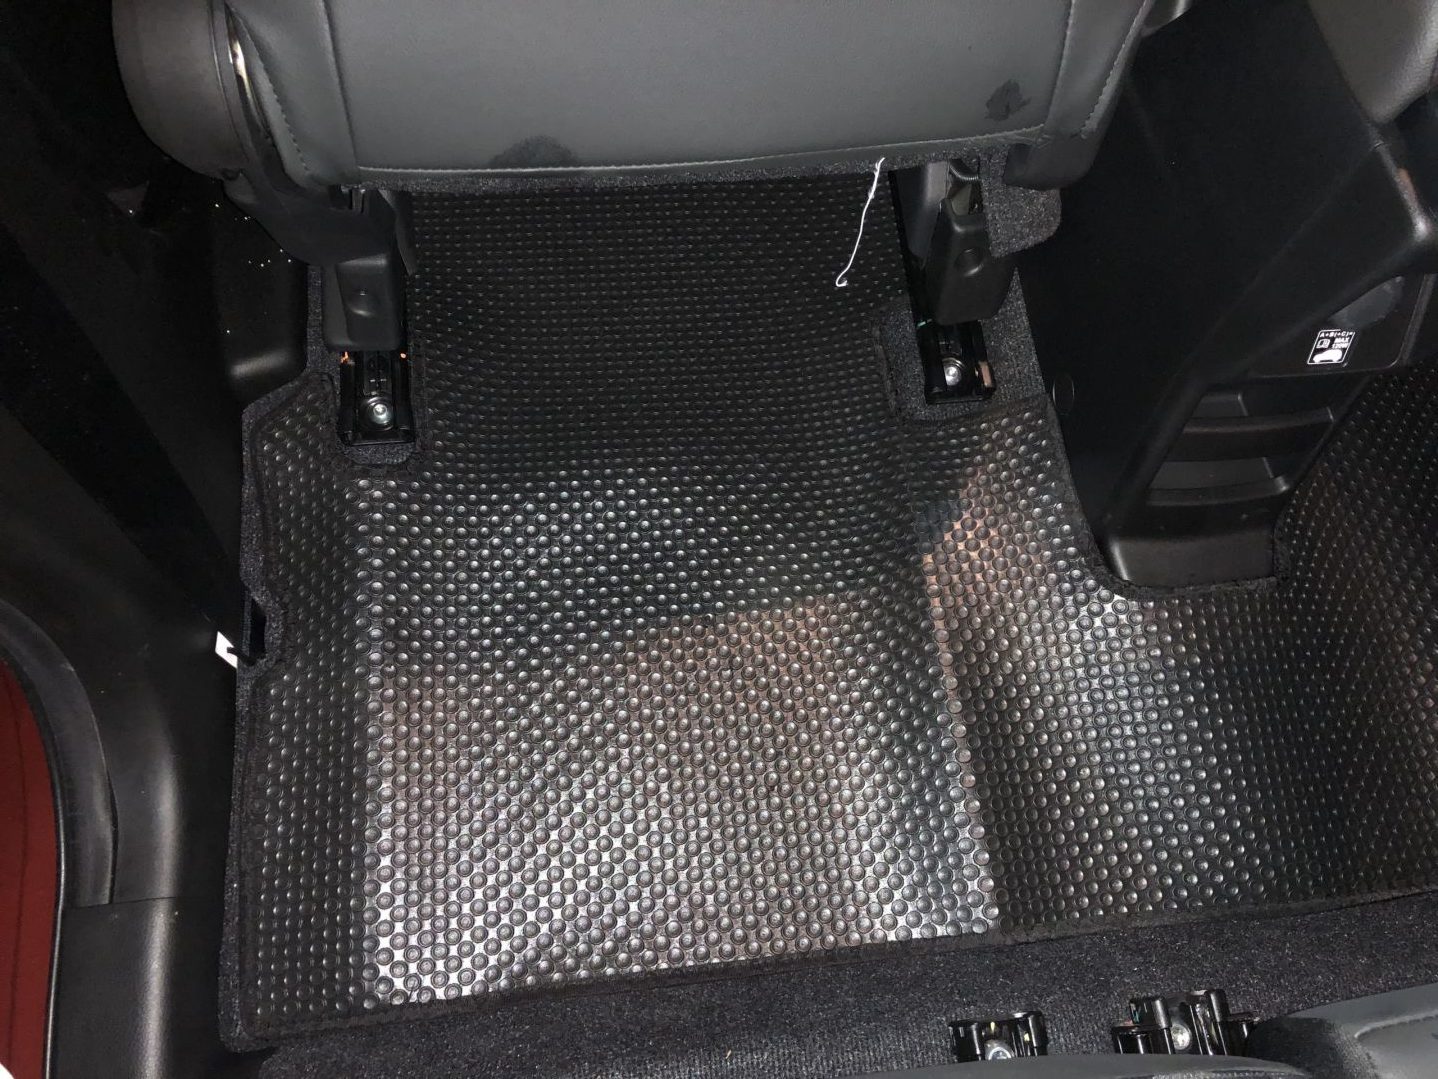 Thảm lót sàn Suzuki XL7